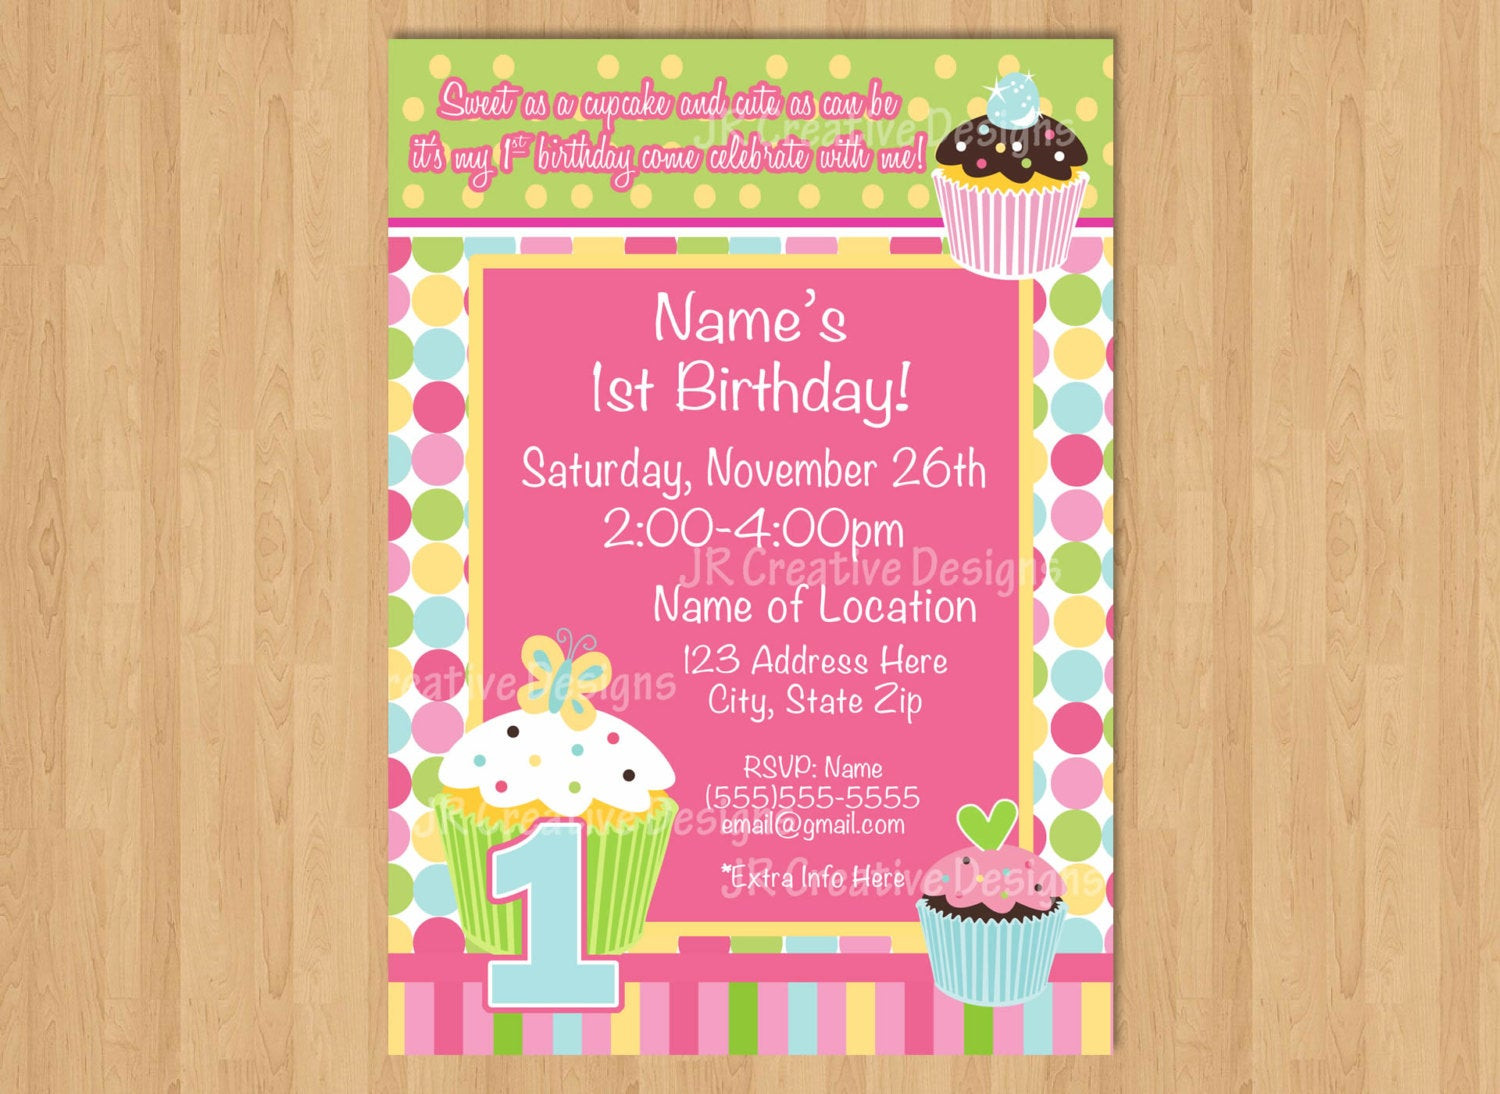 Best ideas about Cupcake Birthday Invitations
. Save or Pin Cupcake birthday party invitation girl 1st birthday invitation Now.